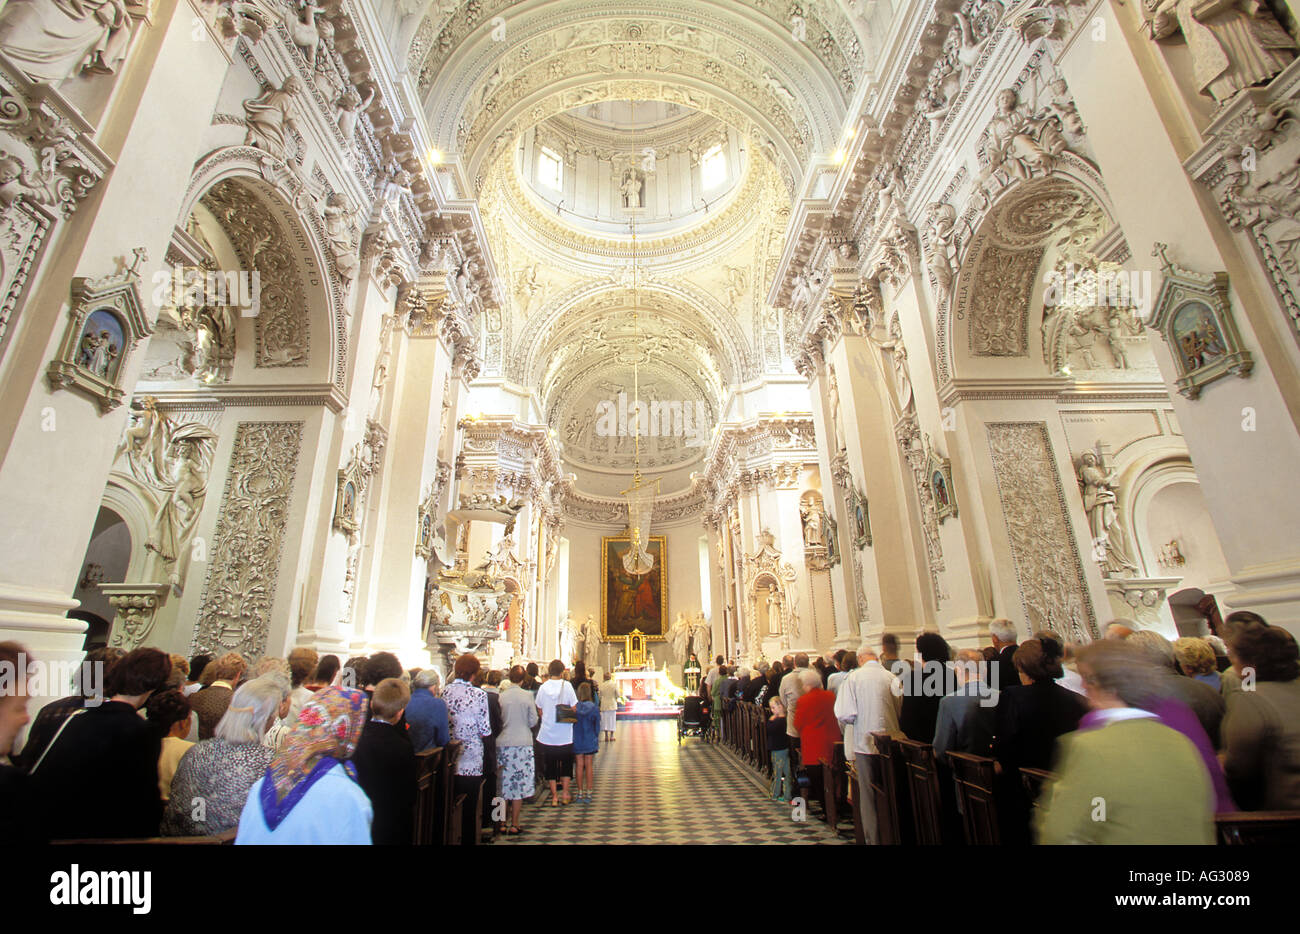 The baroque style interior of Saints Peter & Paul church Vilnius Lithuania Stock Photo